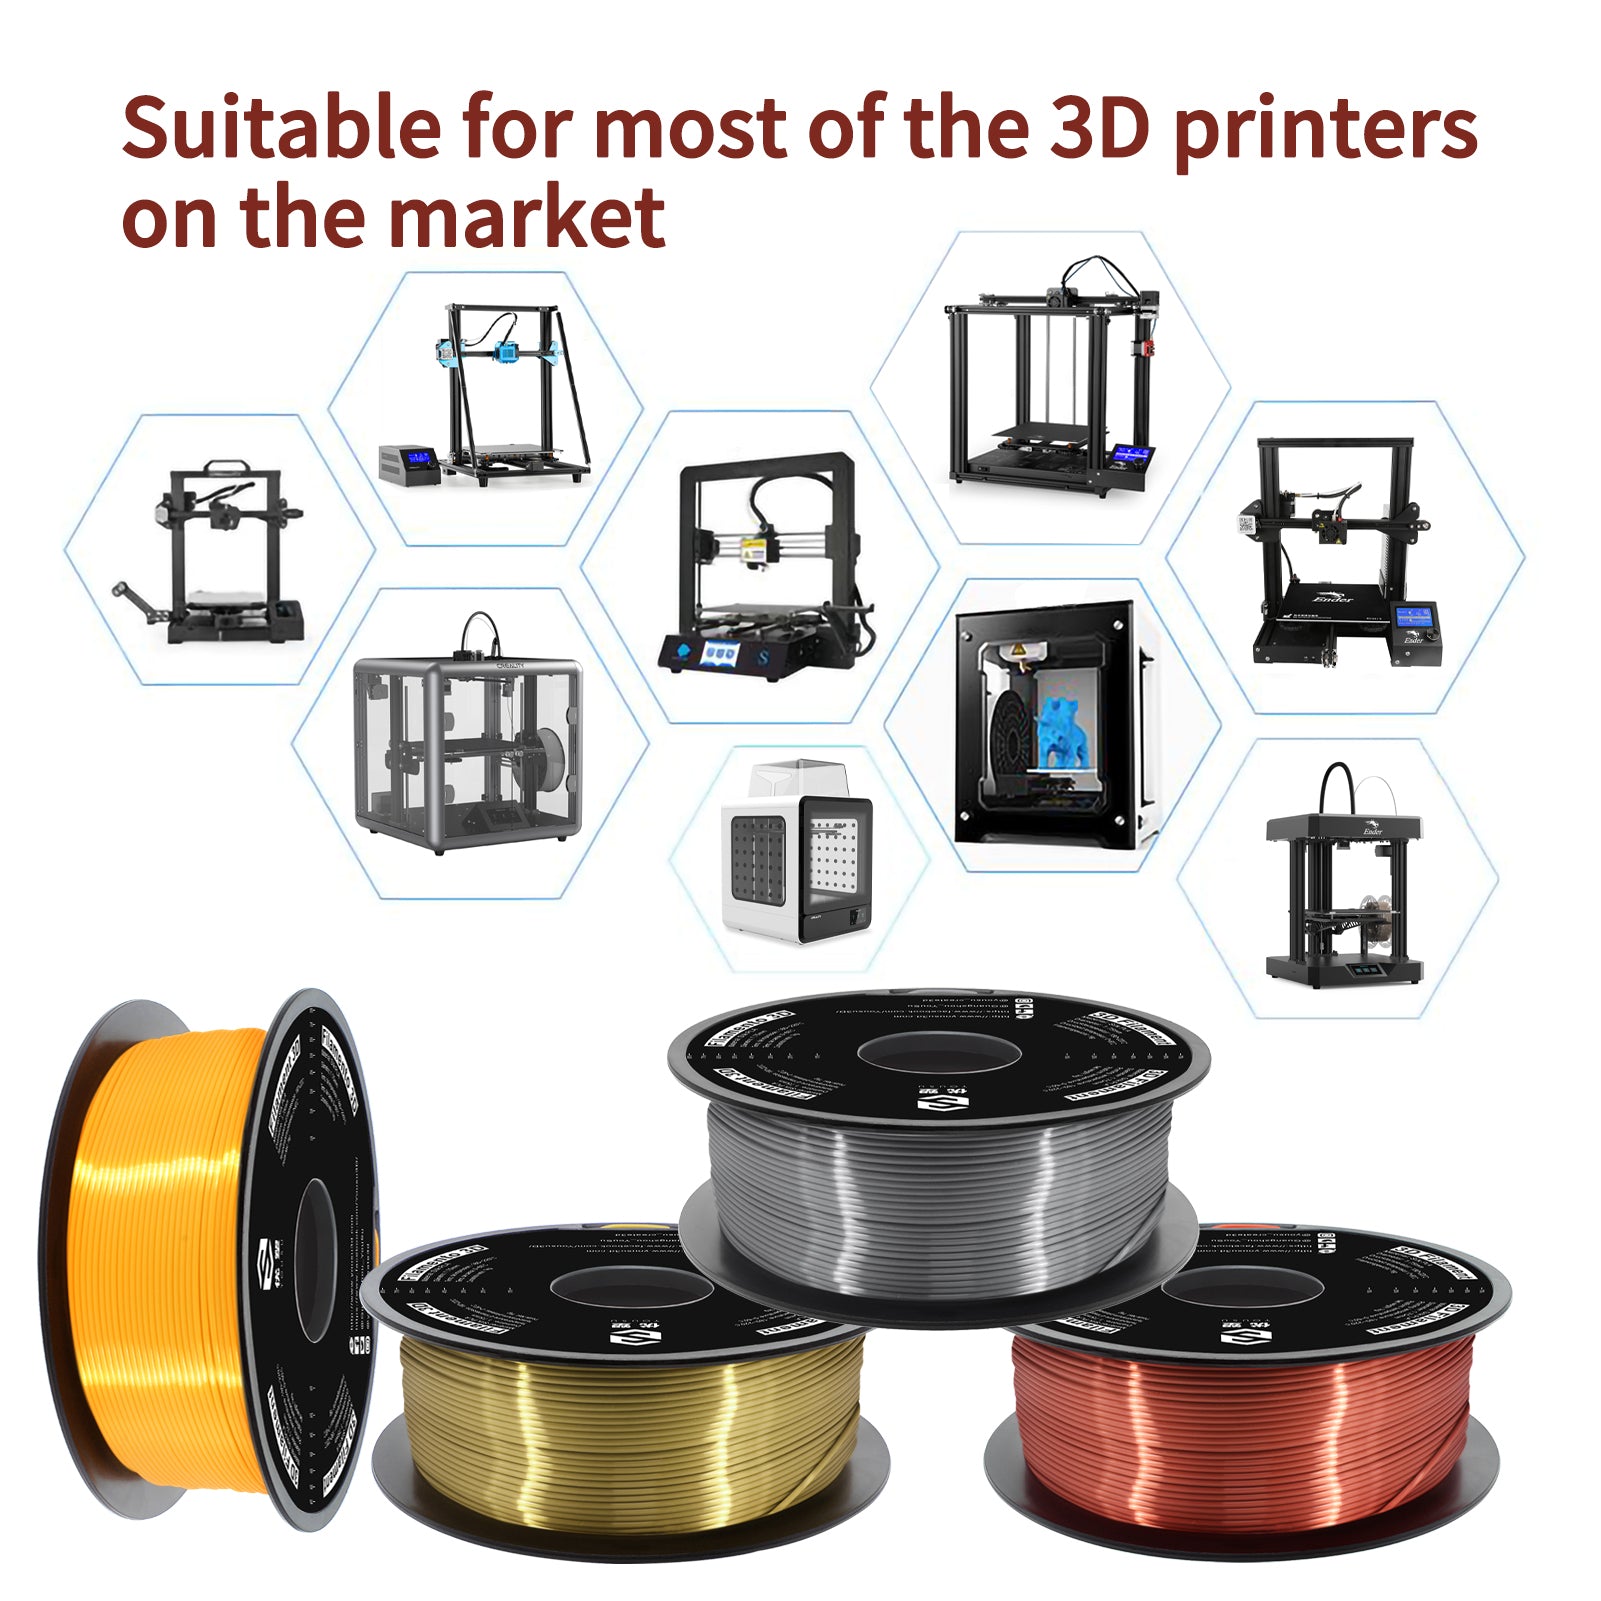 1kg YouSu Silk Shiny PLA 3D Printer Filament 1.75mm diameter Printing Consumables for Creality 3D Printer Metalic Silk